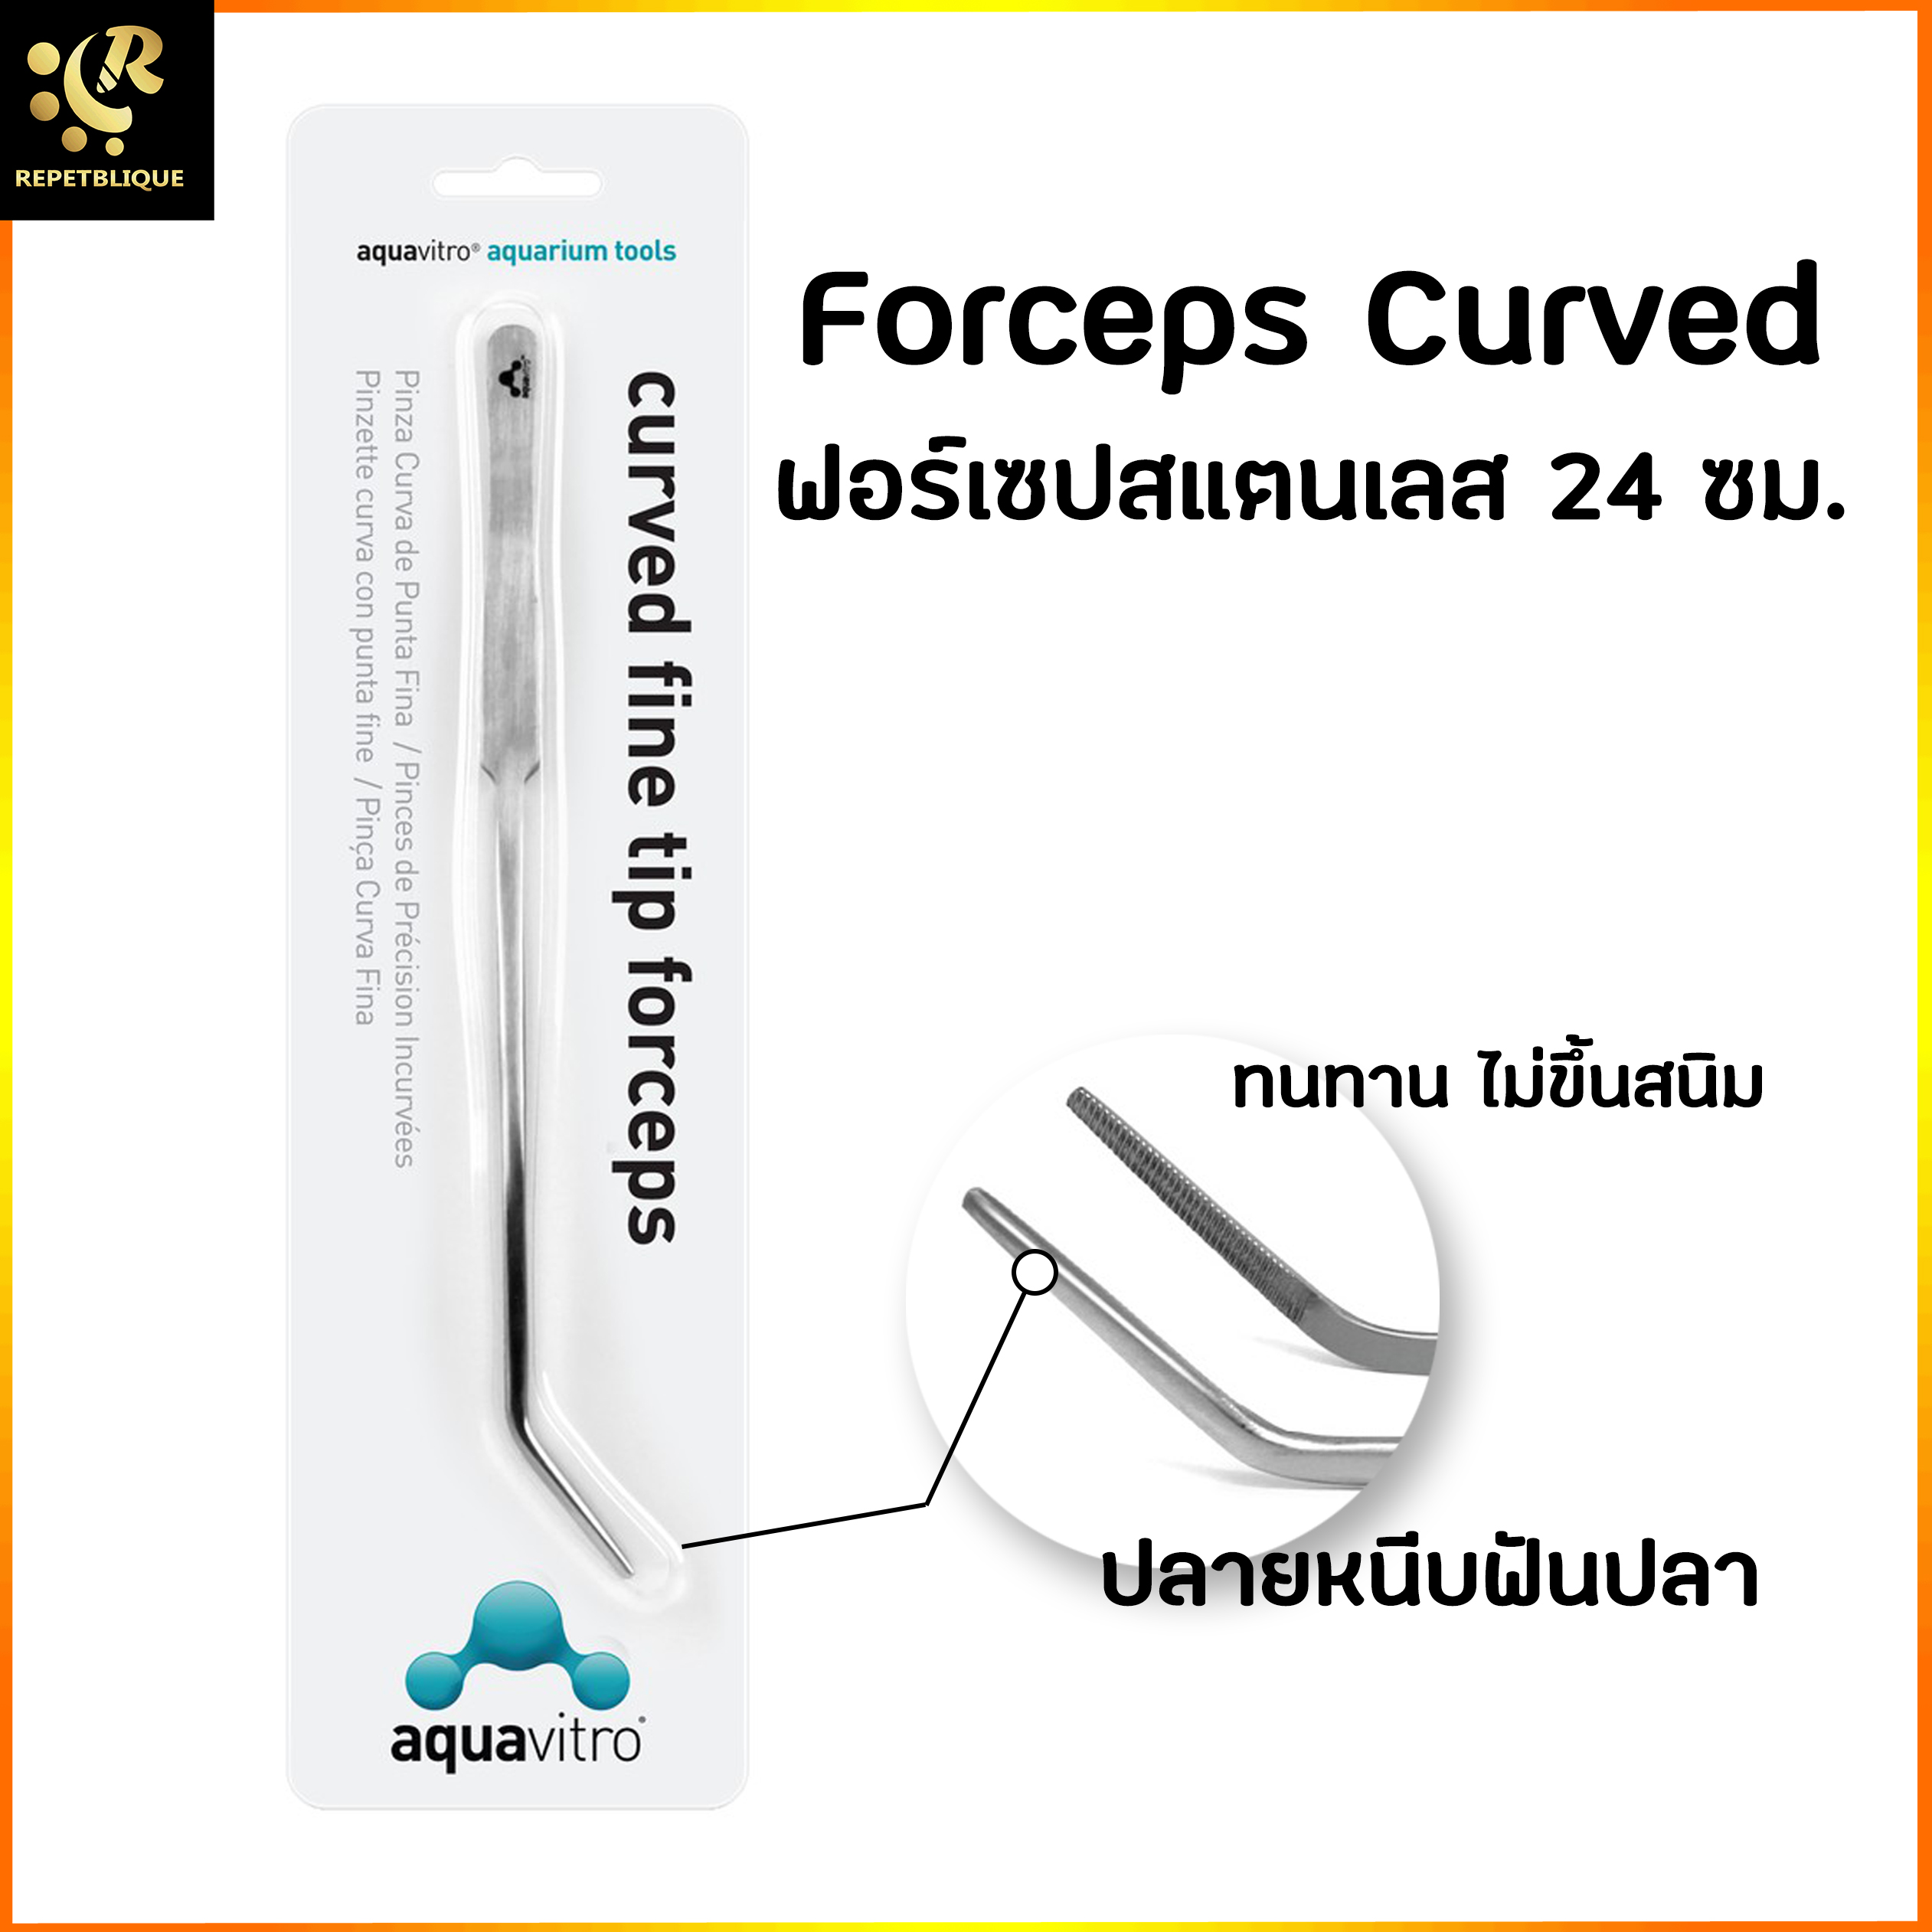 aquavitro Curved Forceps